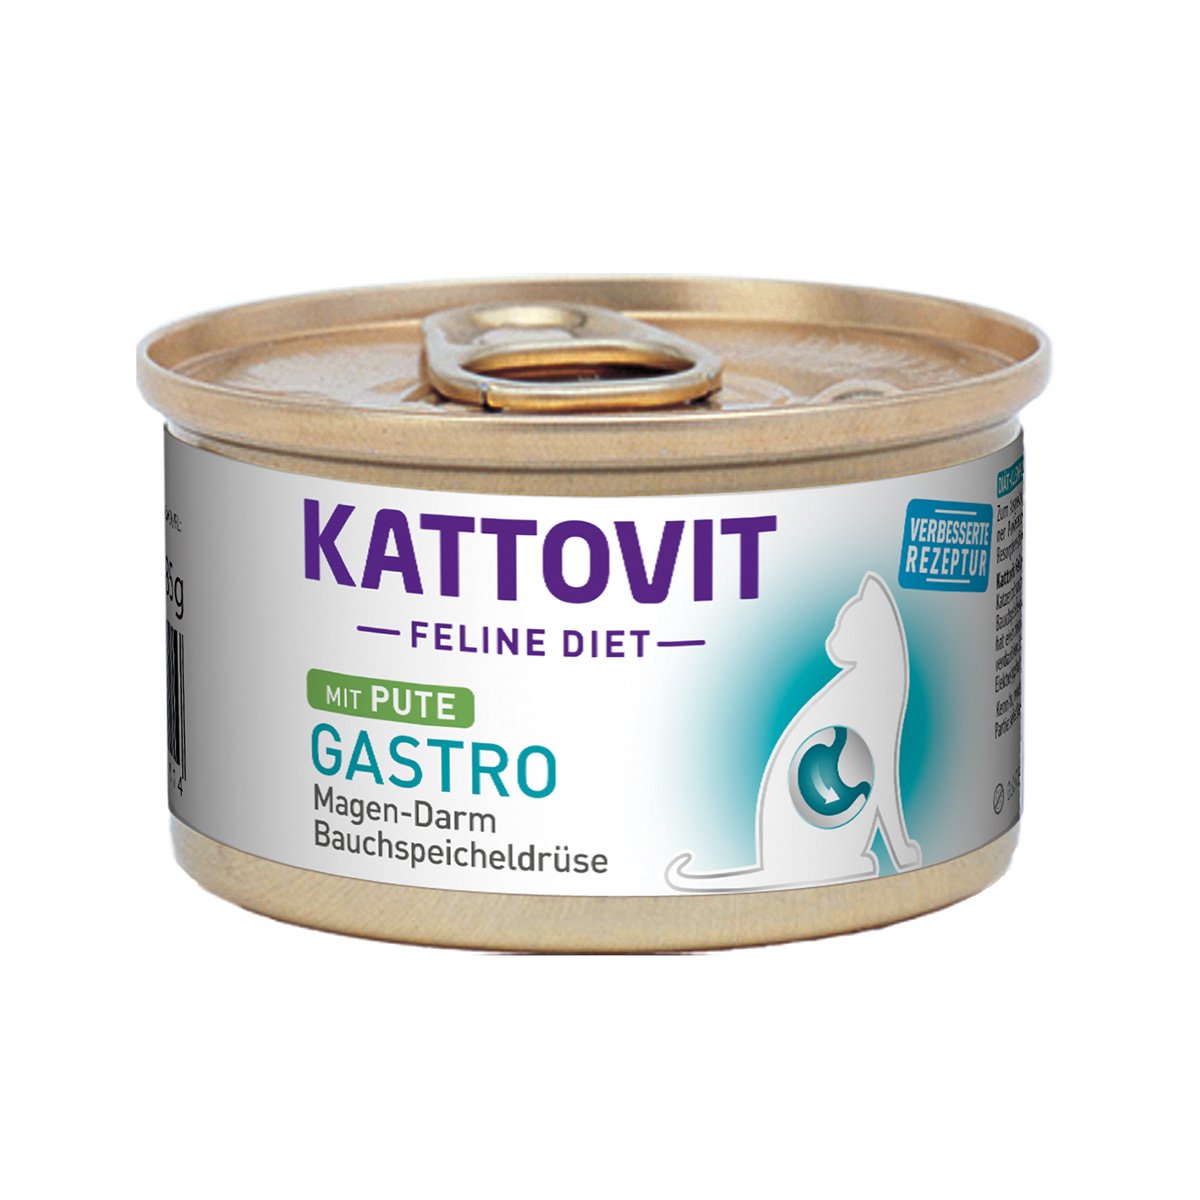 KATTOVIT Feline Diet Gastro Pute 12x85g